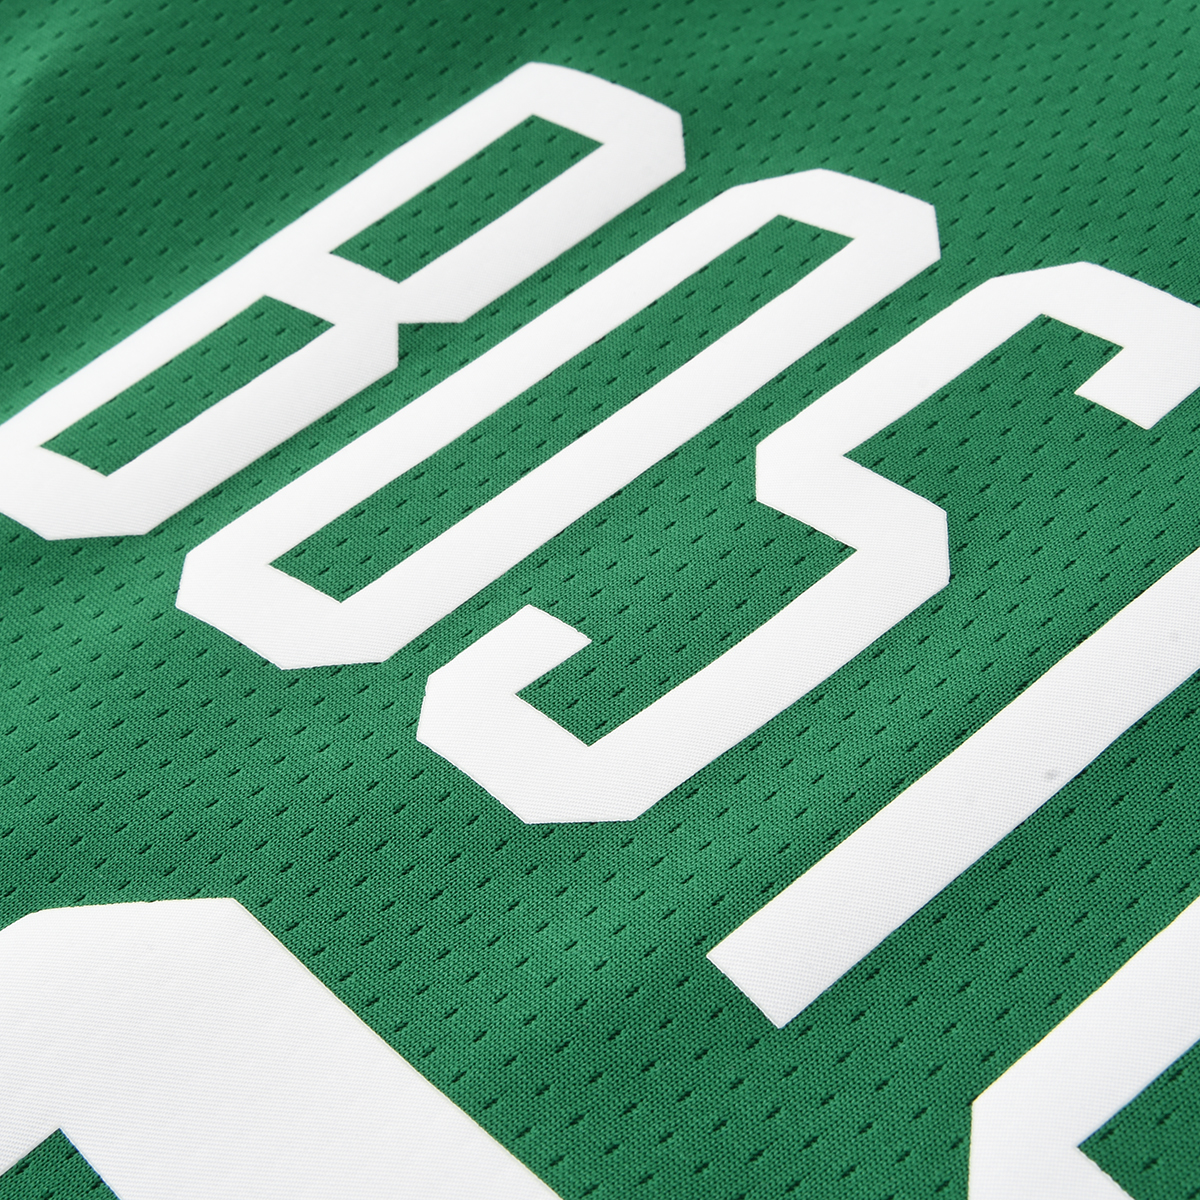 Musculosa Nike Boston Celtics Icon 2022/23 Hombre,  image number null